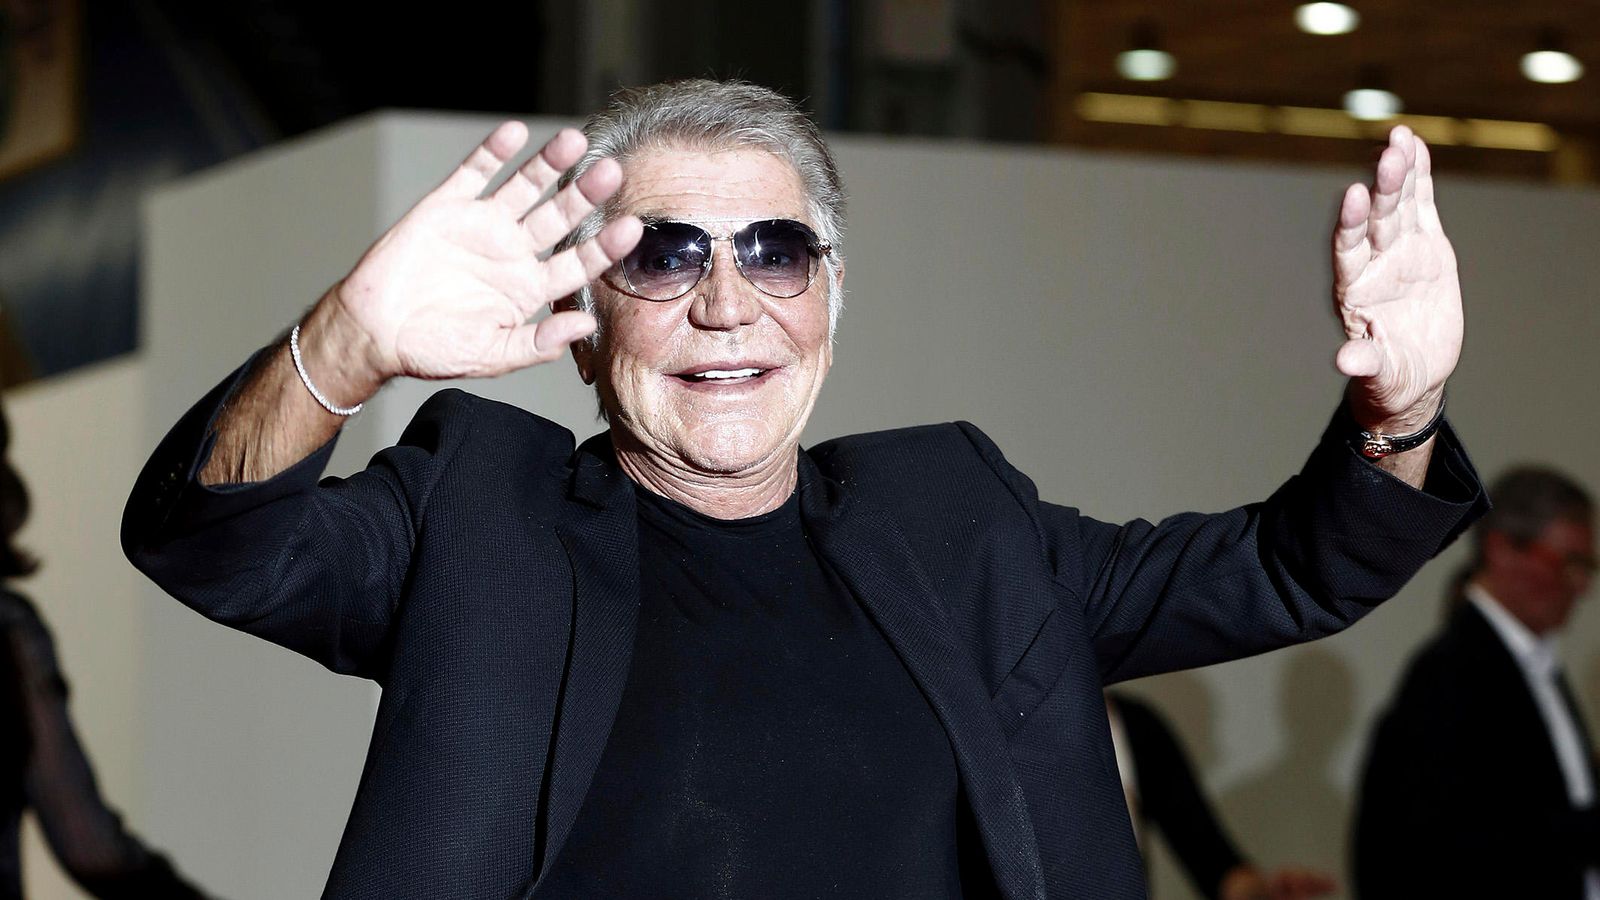 Italian fashion designer Roberto Cavalli has died